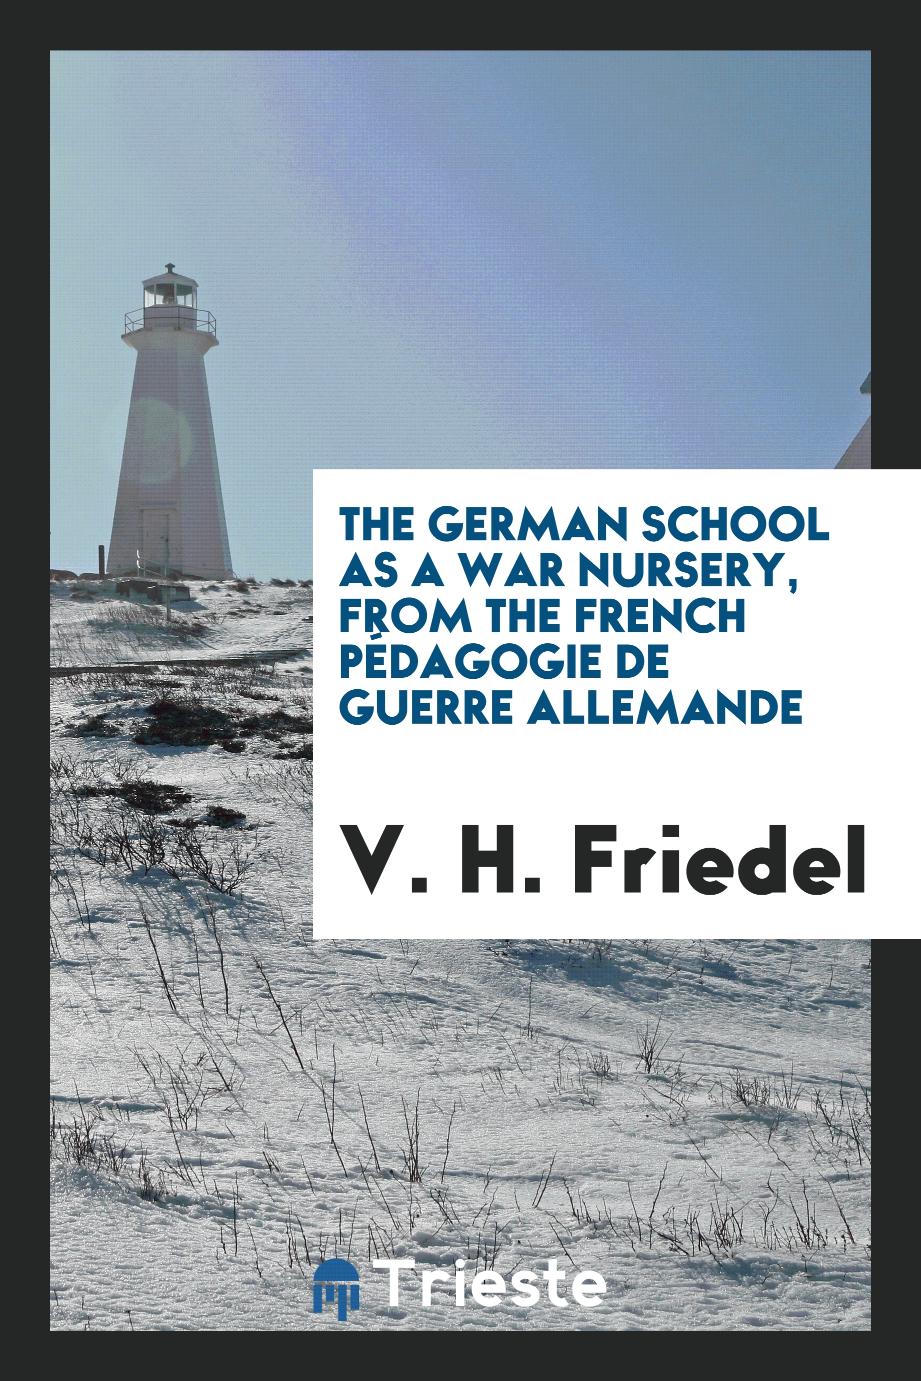 The German school as a war nursery, from the French Pédagogie de guerre allemande